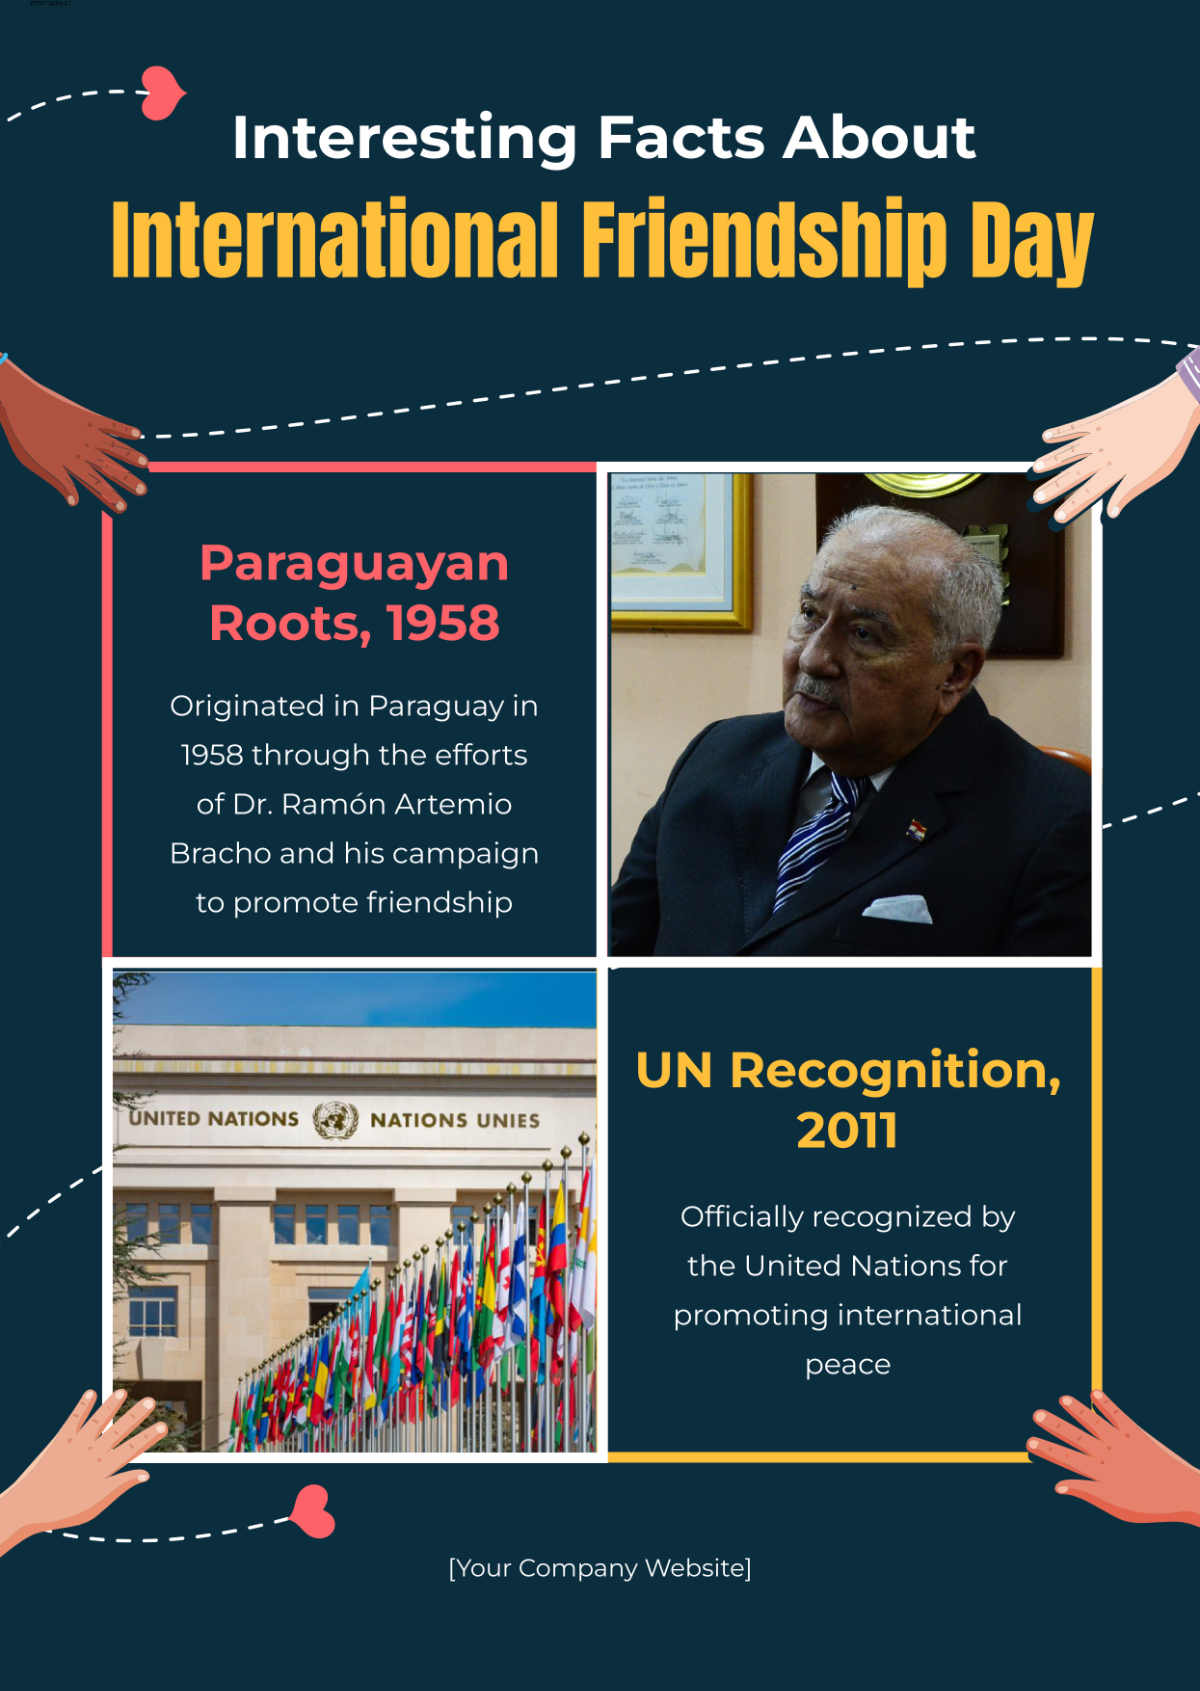 International Friendship Day Facts